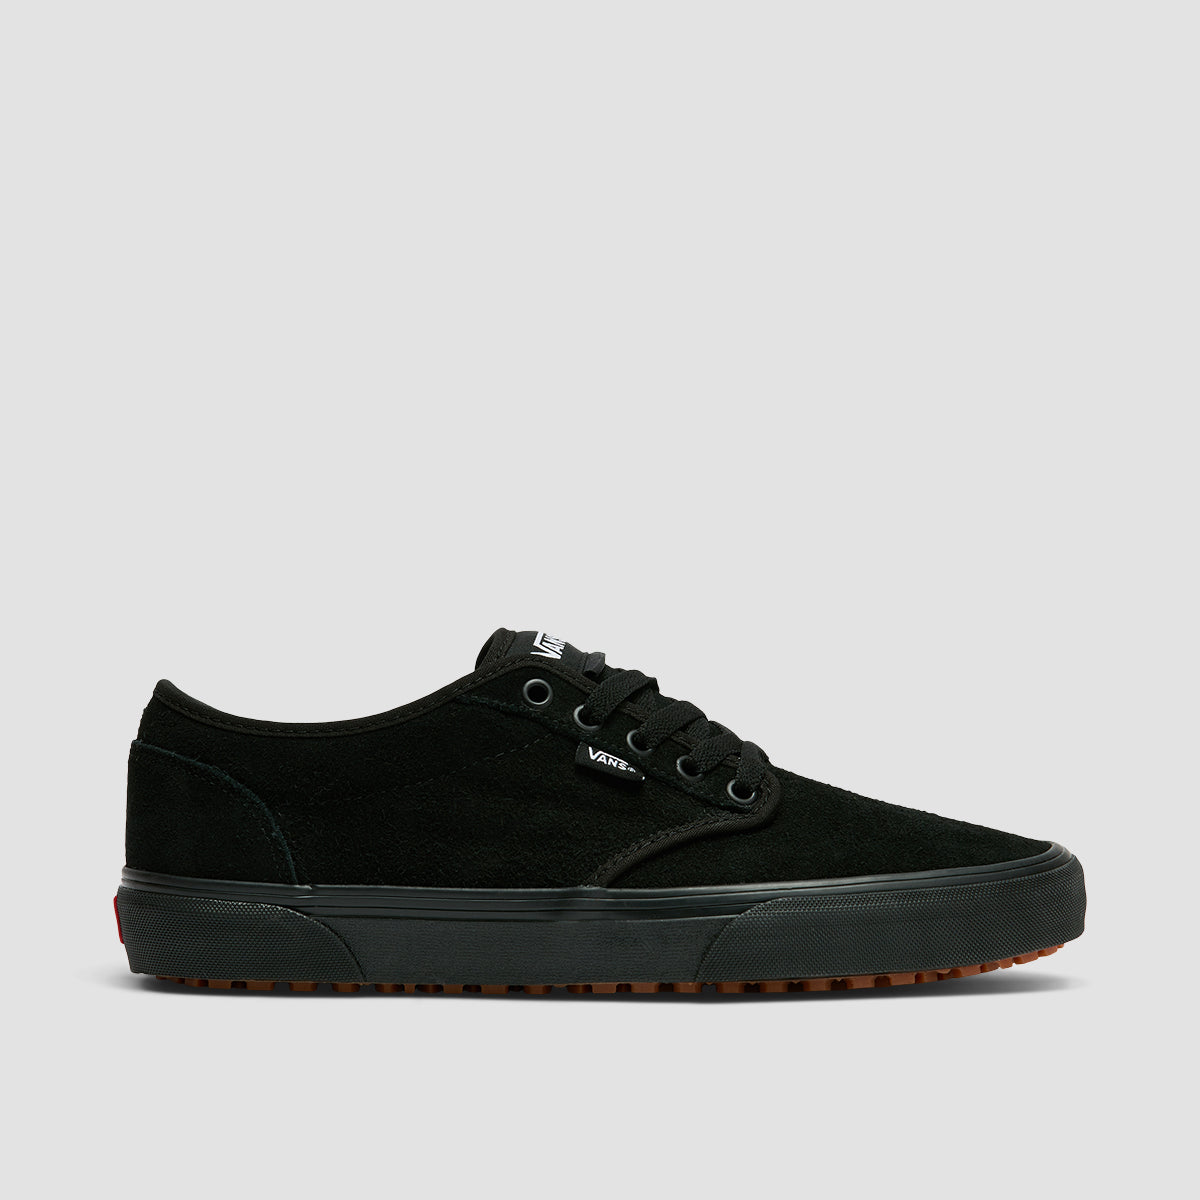 Vans Atwood VansGuard Shoes - Suede Black/Black